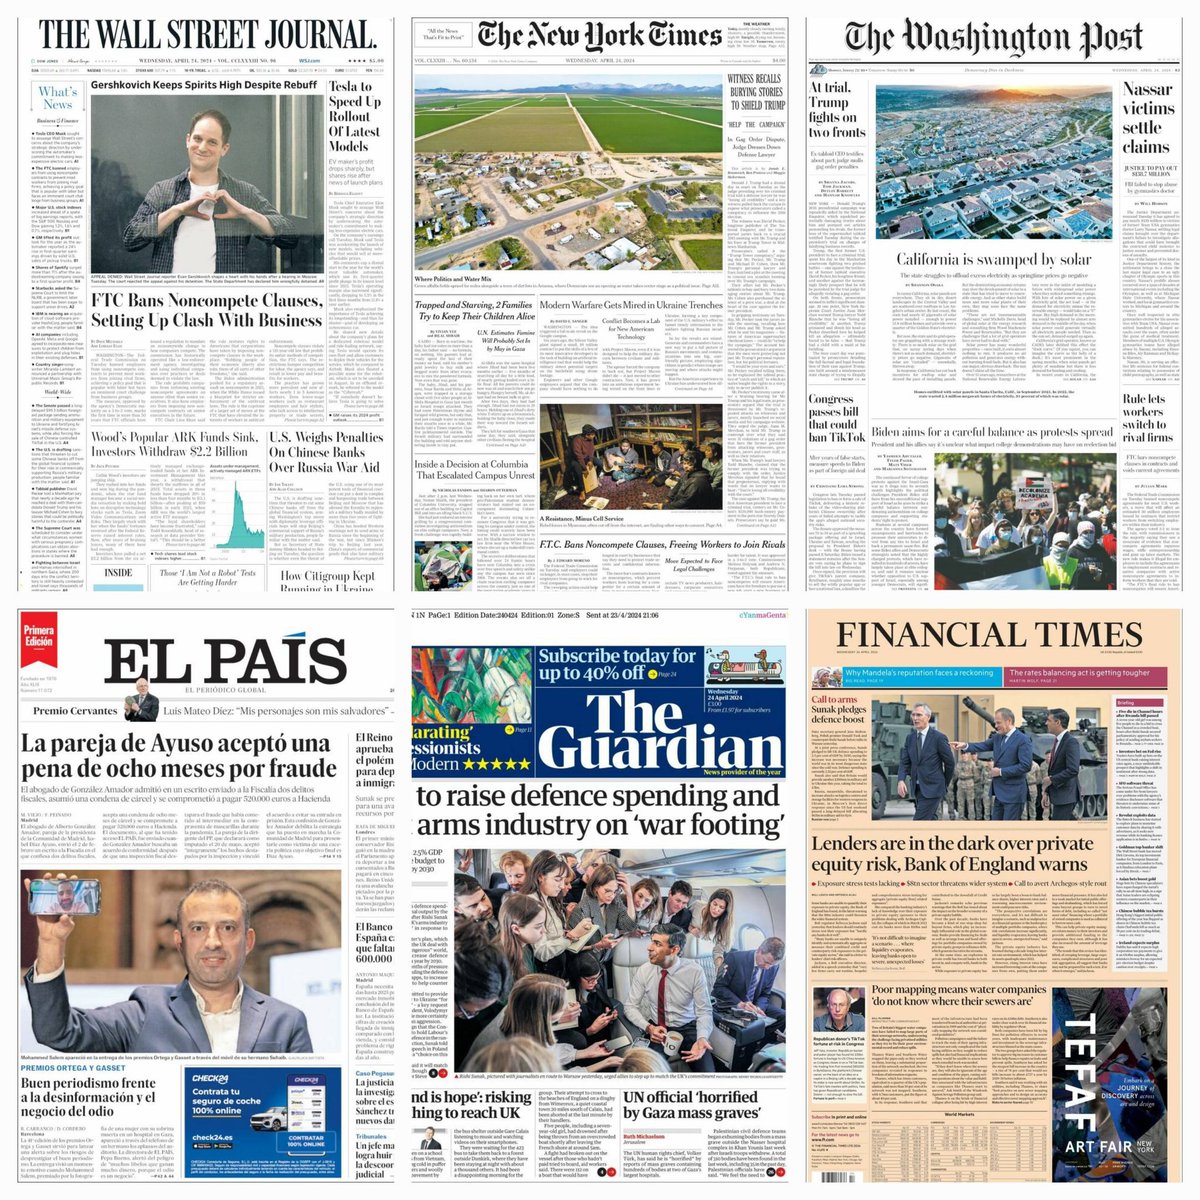 Periódicos en el mundo... #TheWallstreetJournal #Thenewyorktimes #Thewashingtonpost #TheGuardian #ElPaís #Financialtimes #news #newspaper #april24